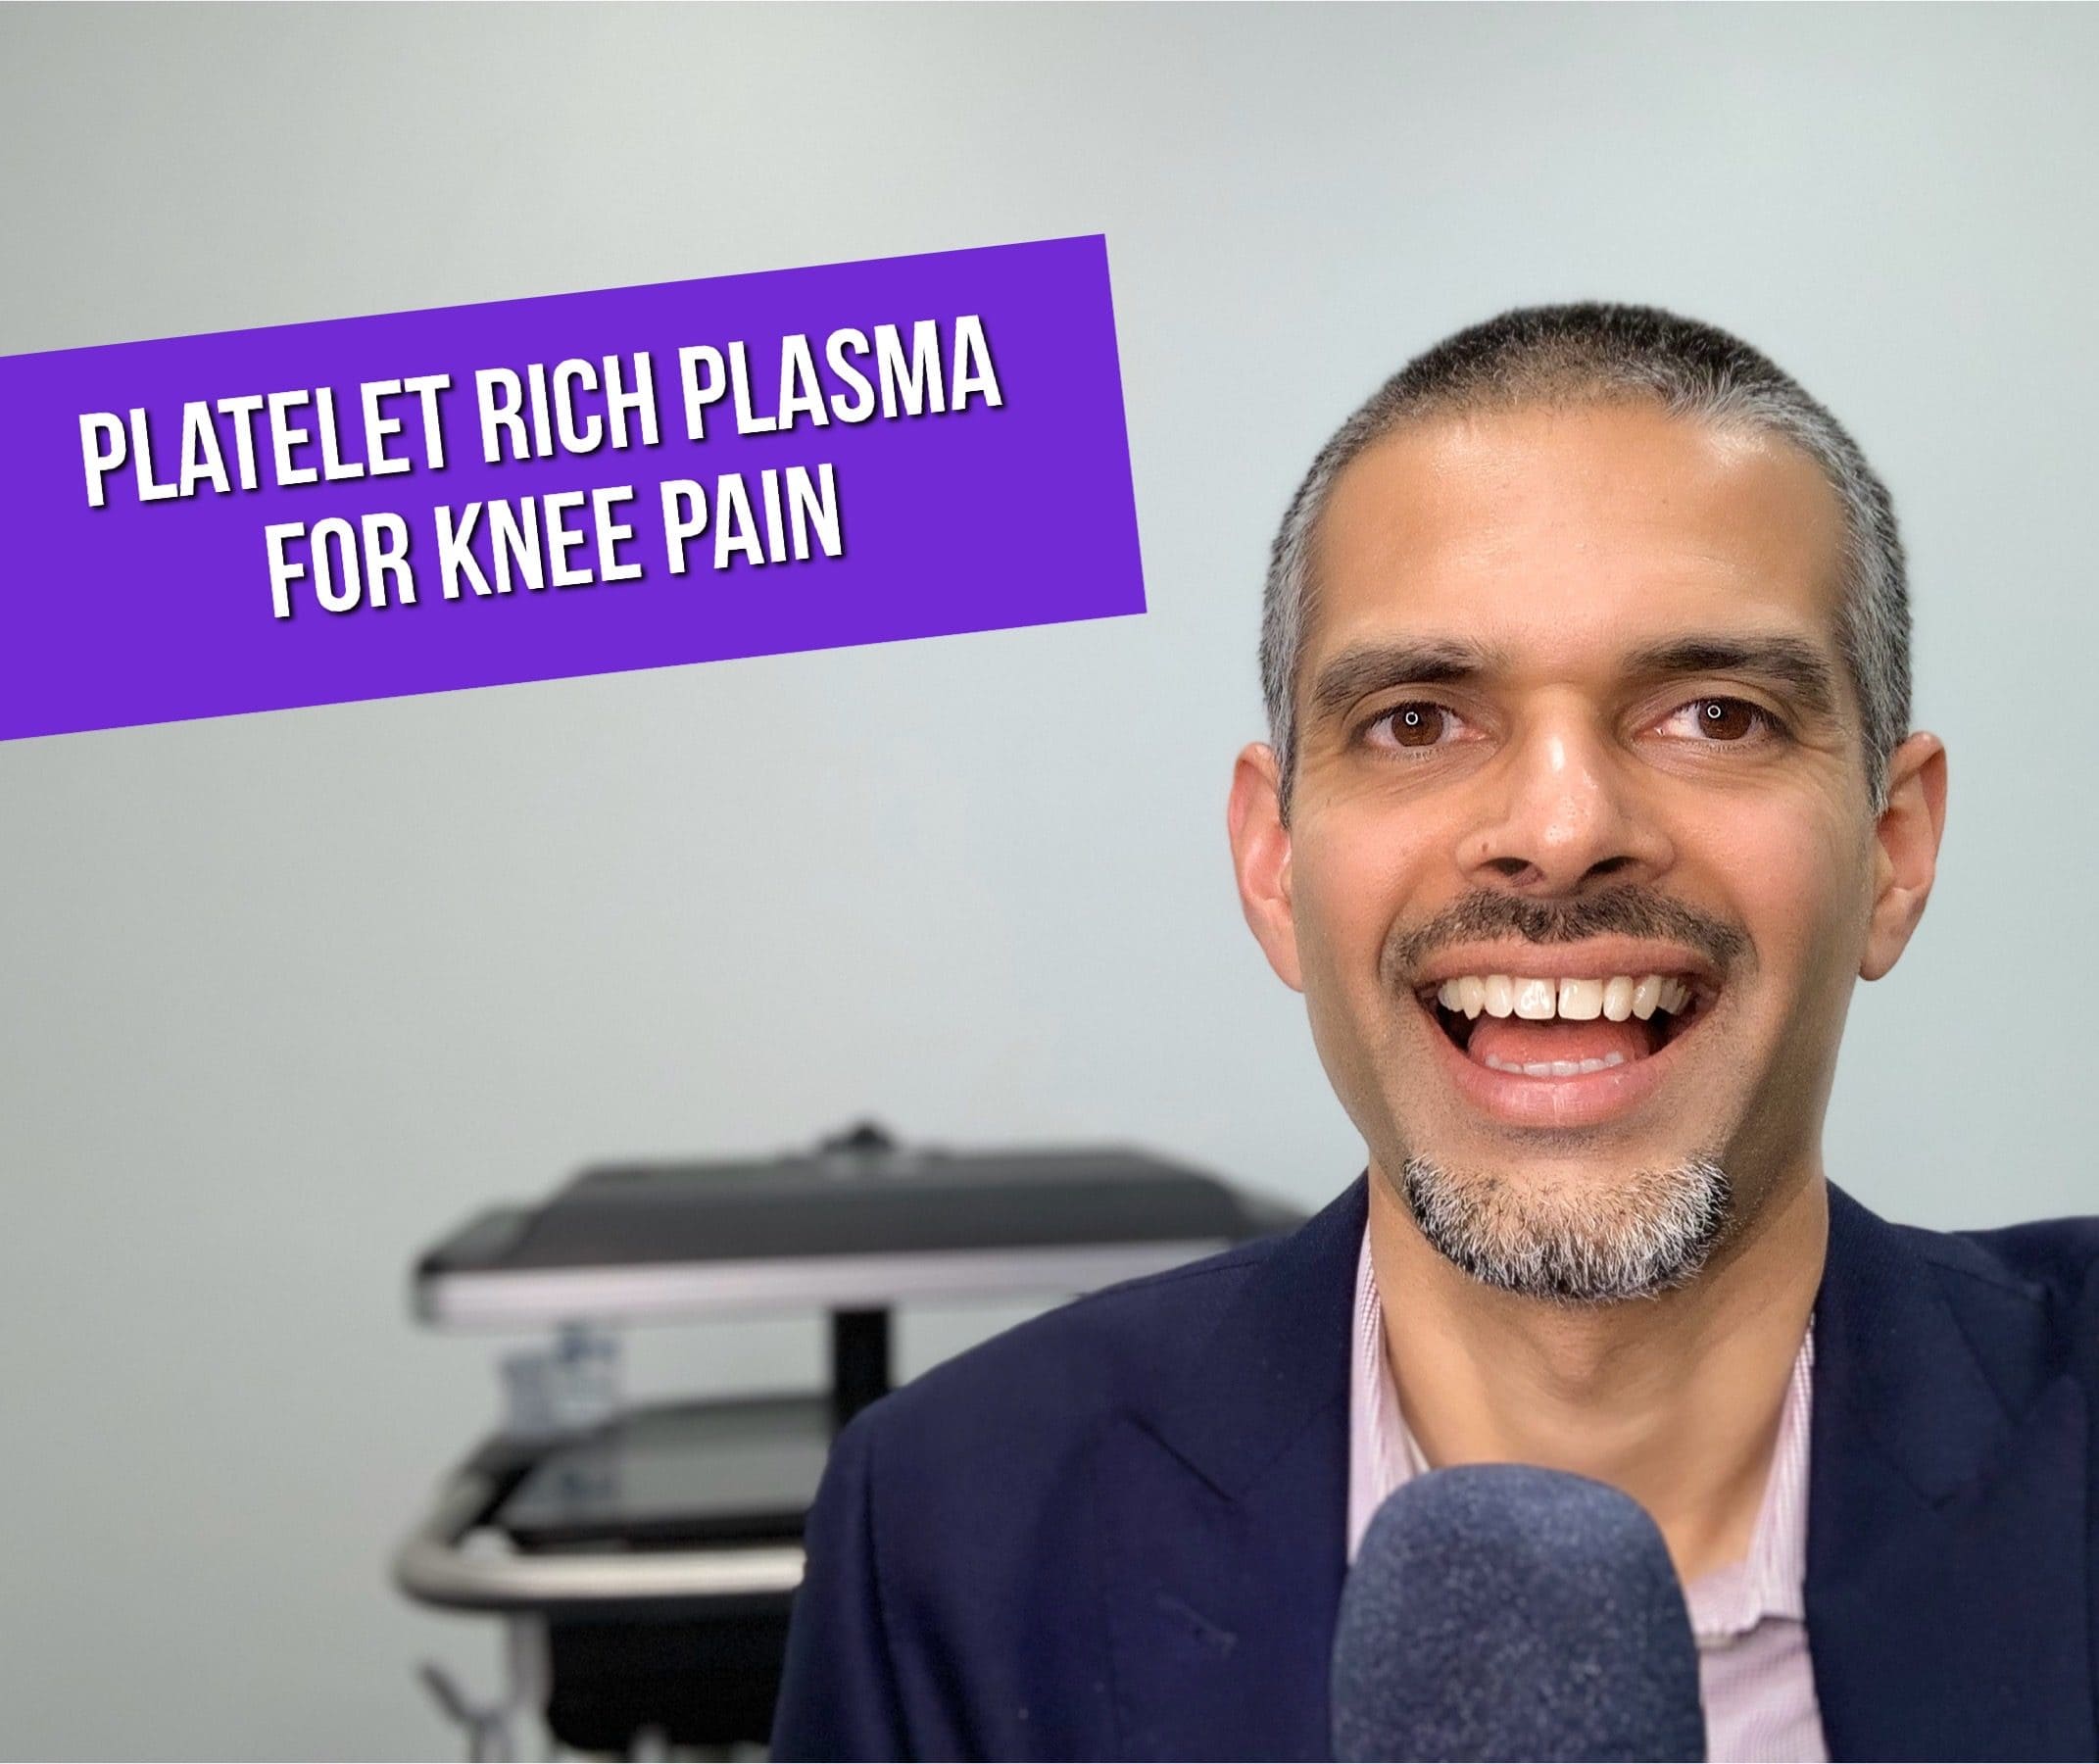 How to Treat Knee Pain- PRP Treatment for Knee Arthritis, Tendinitis, and Injuries